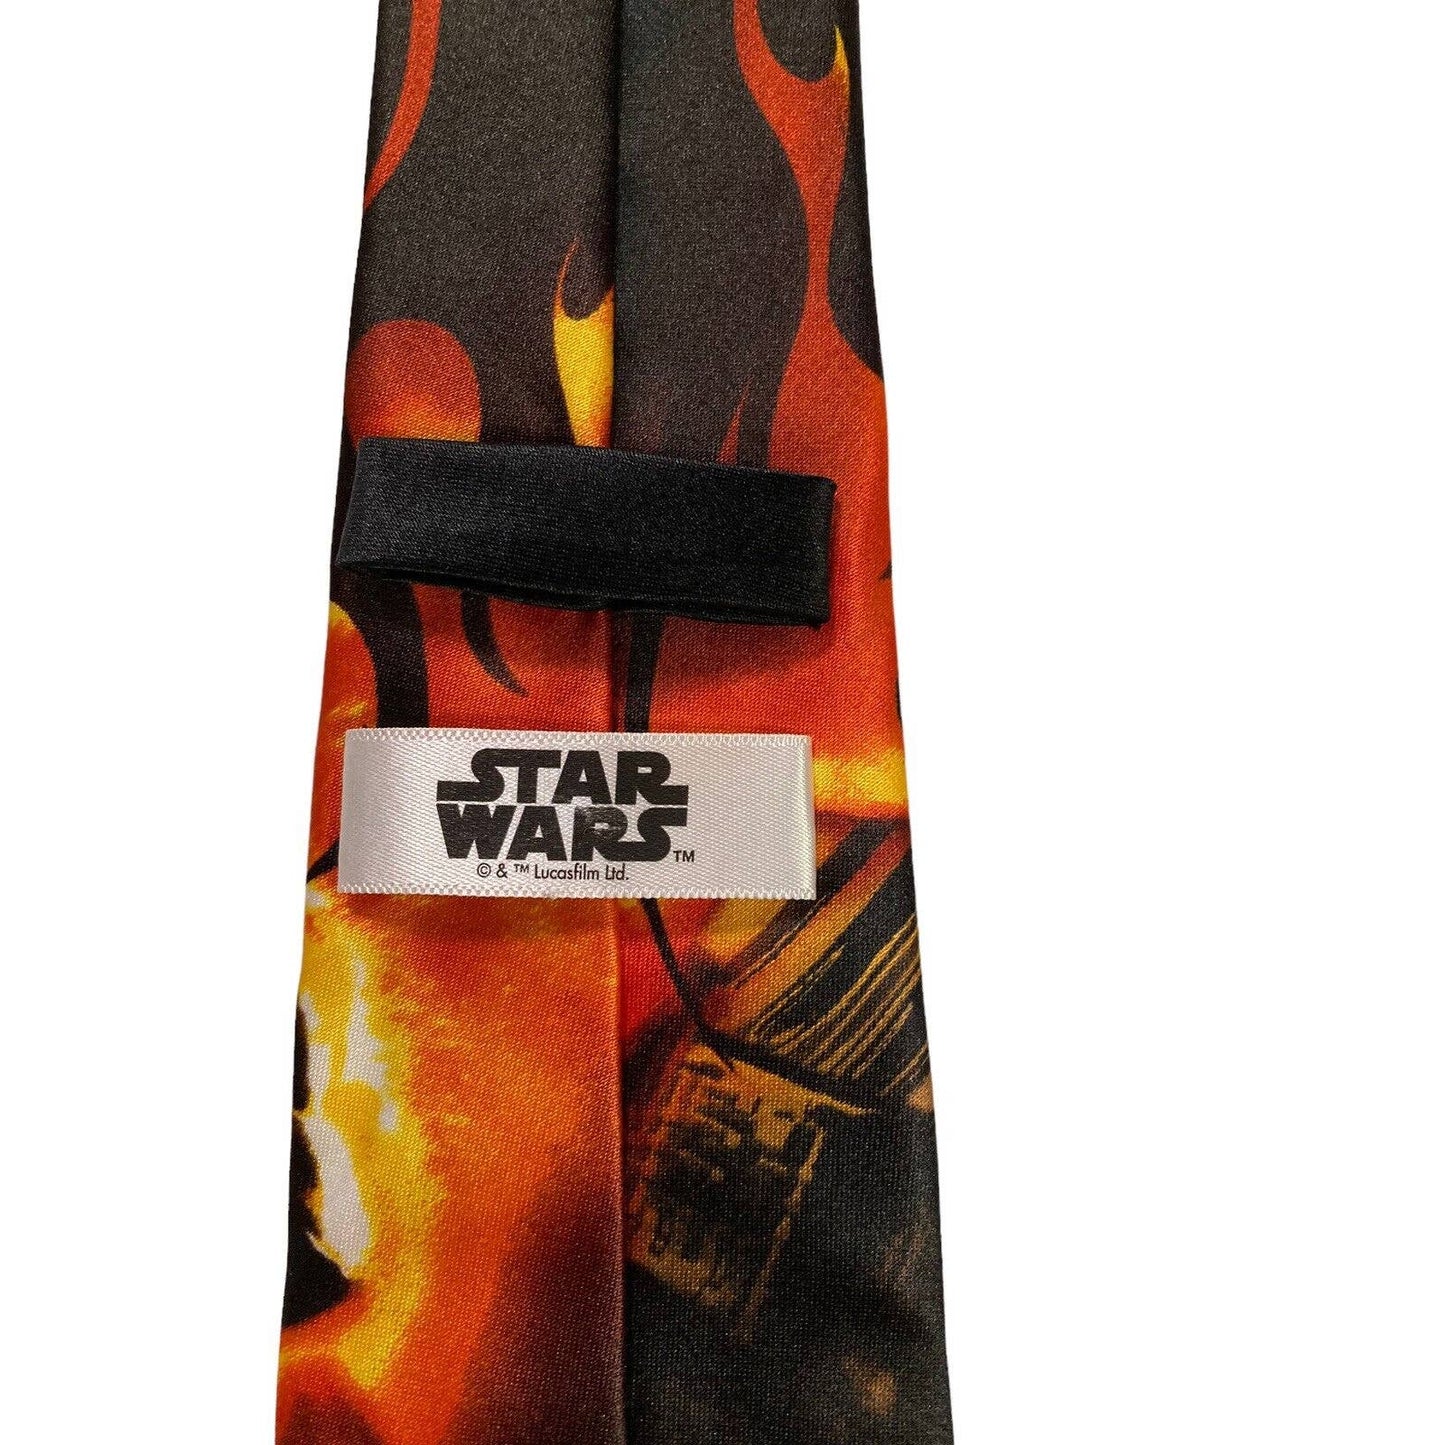 Star Wars Darth Vader Force Novelty Necktie Short Length